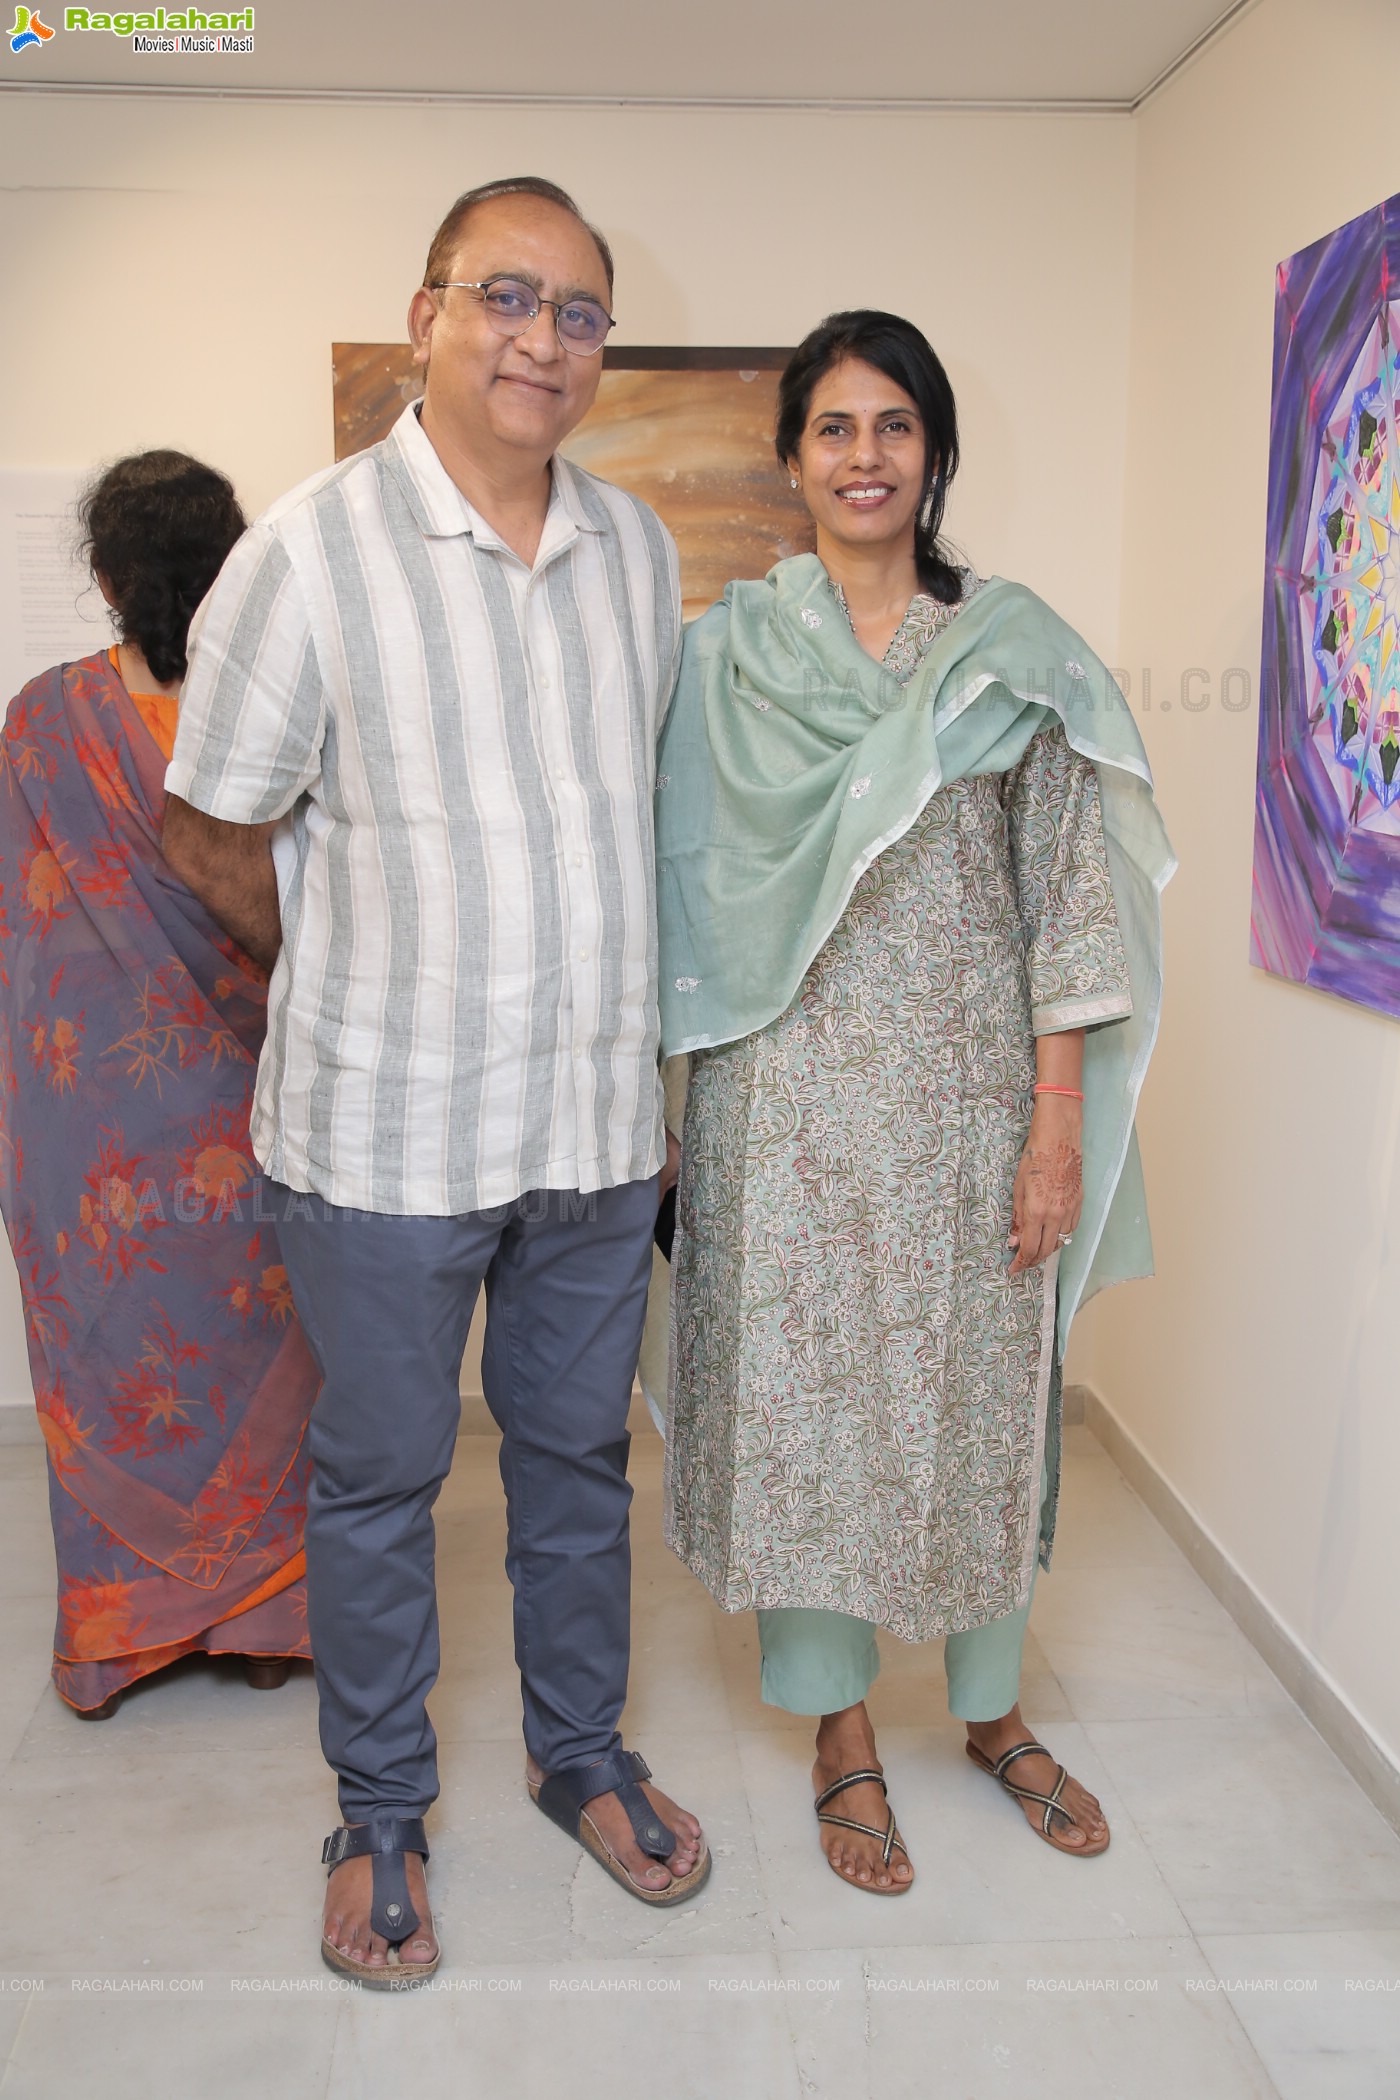 Pict-O-Poesia - An Art Exhibition at Shrishti Art Gallery